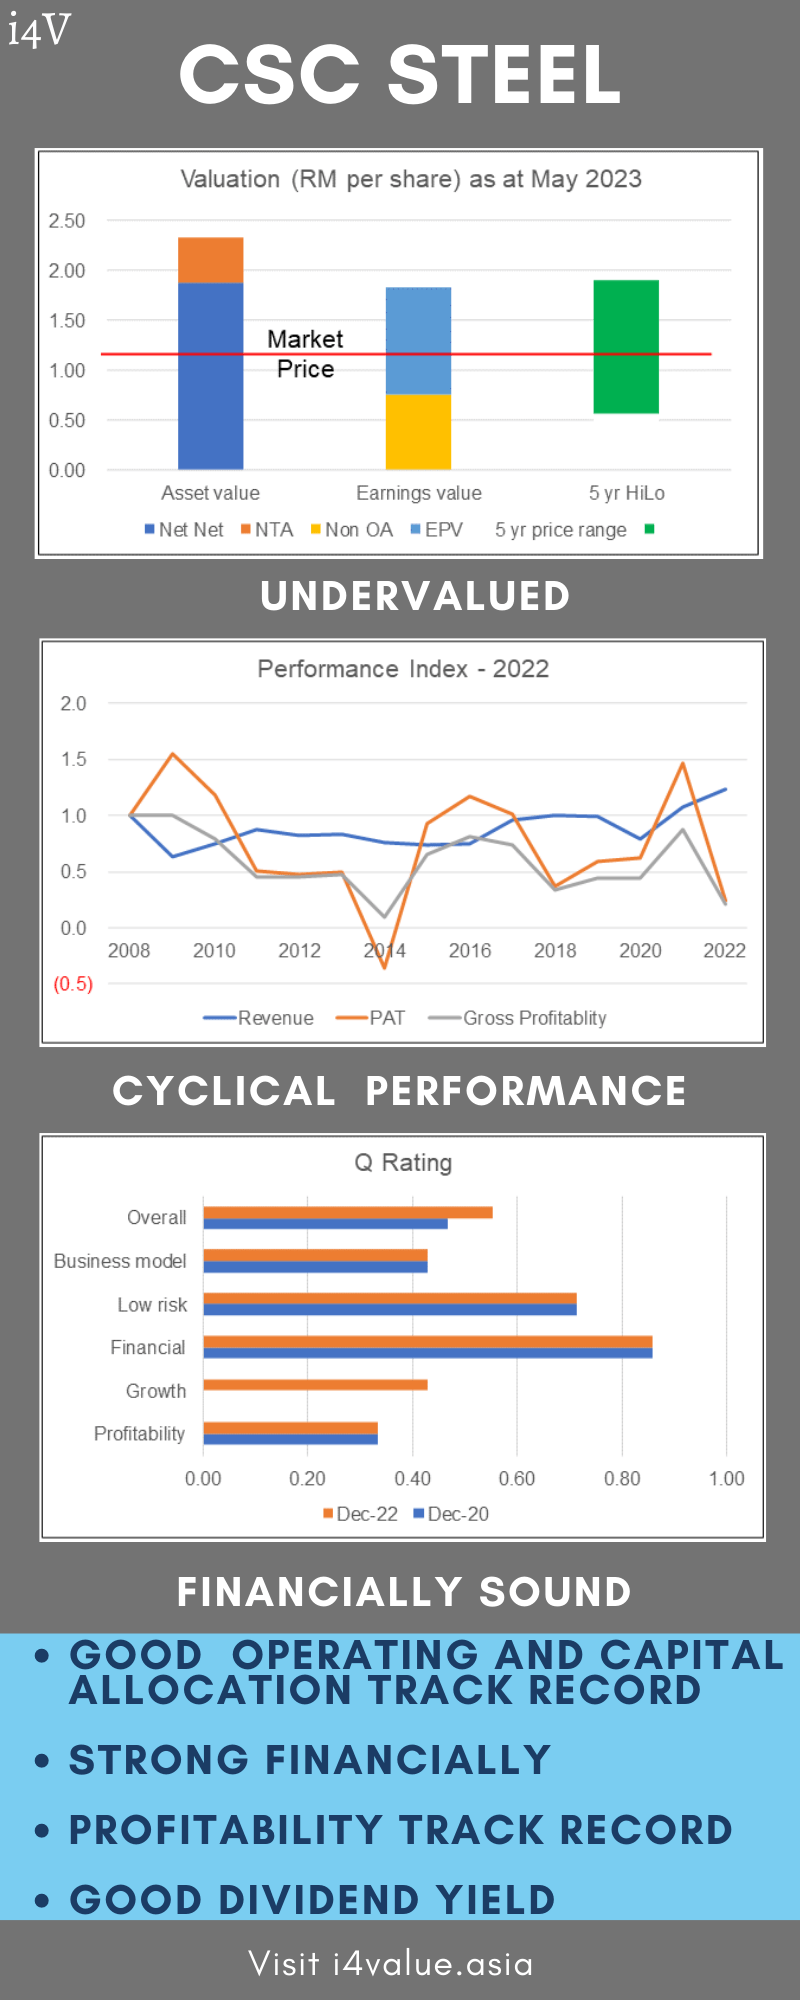 Is CSC Steel one of the better Bursa stocks 2023